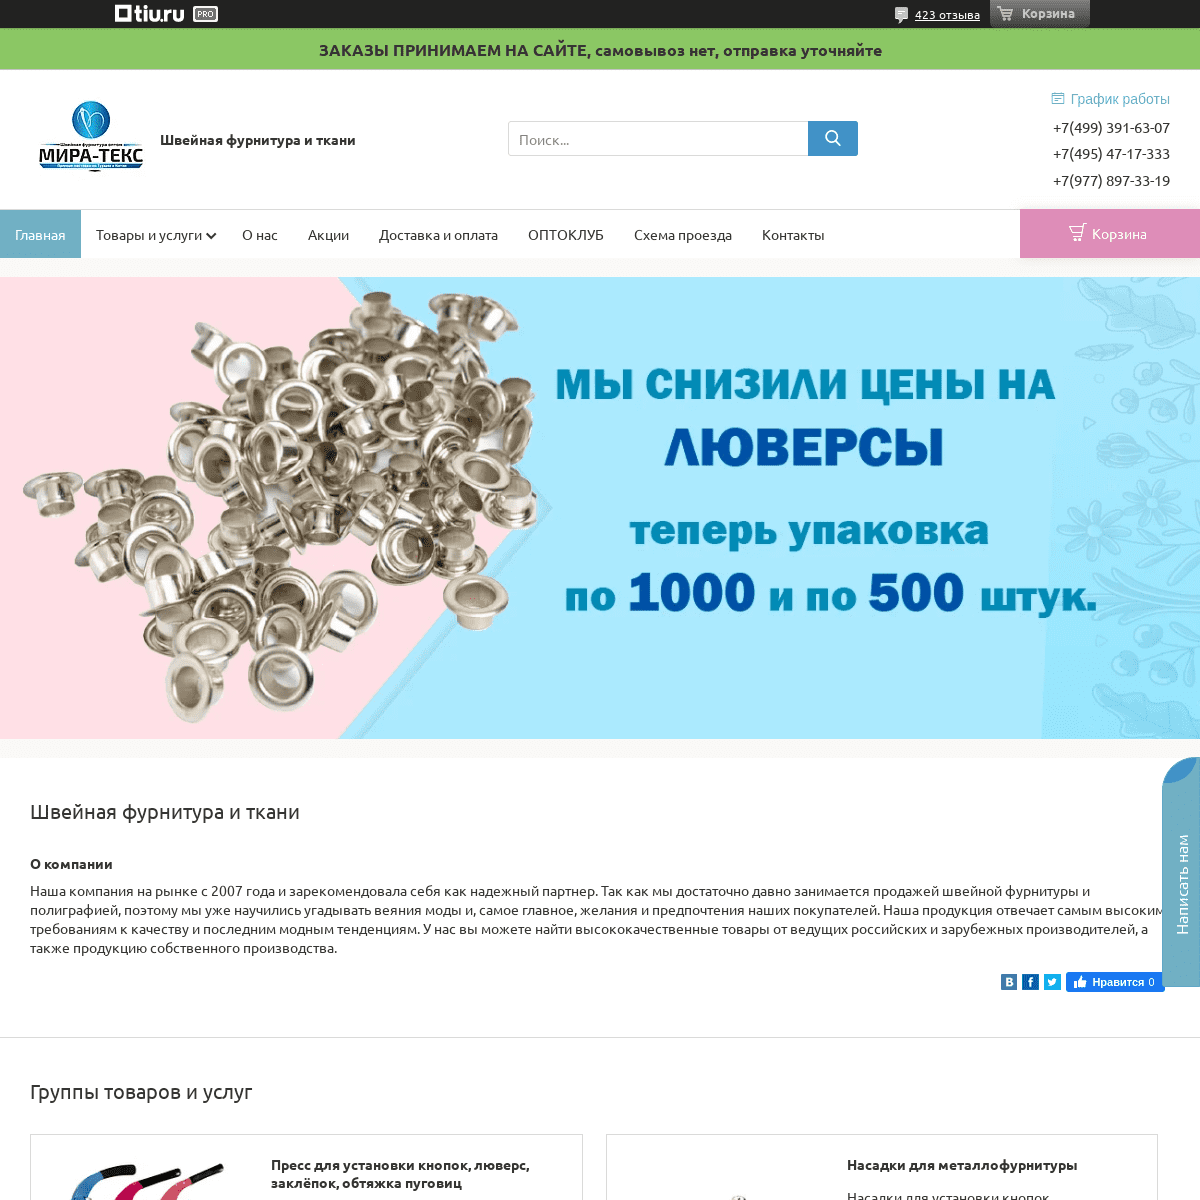 A complete backup of mira-teks.ru